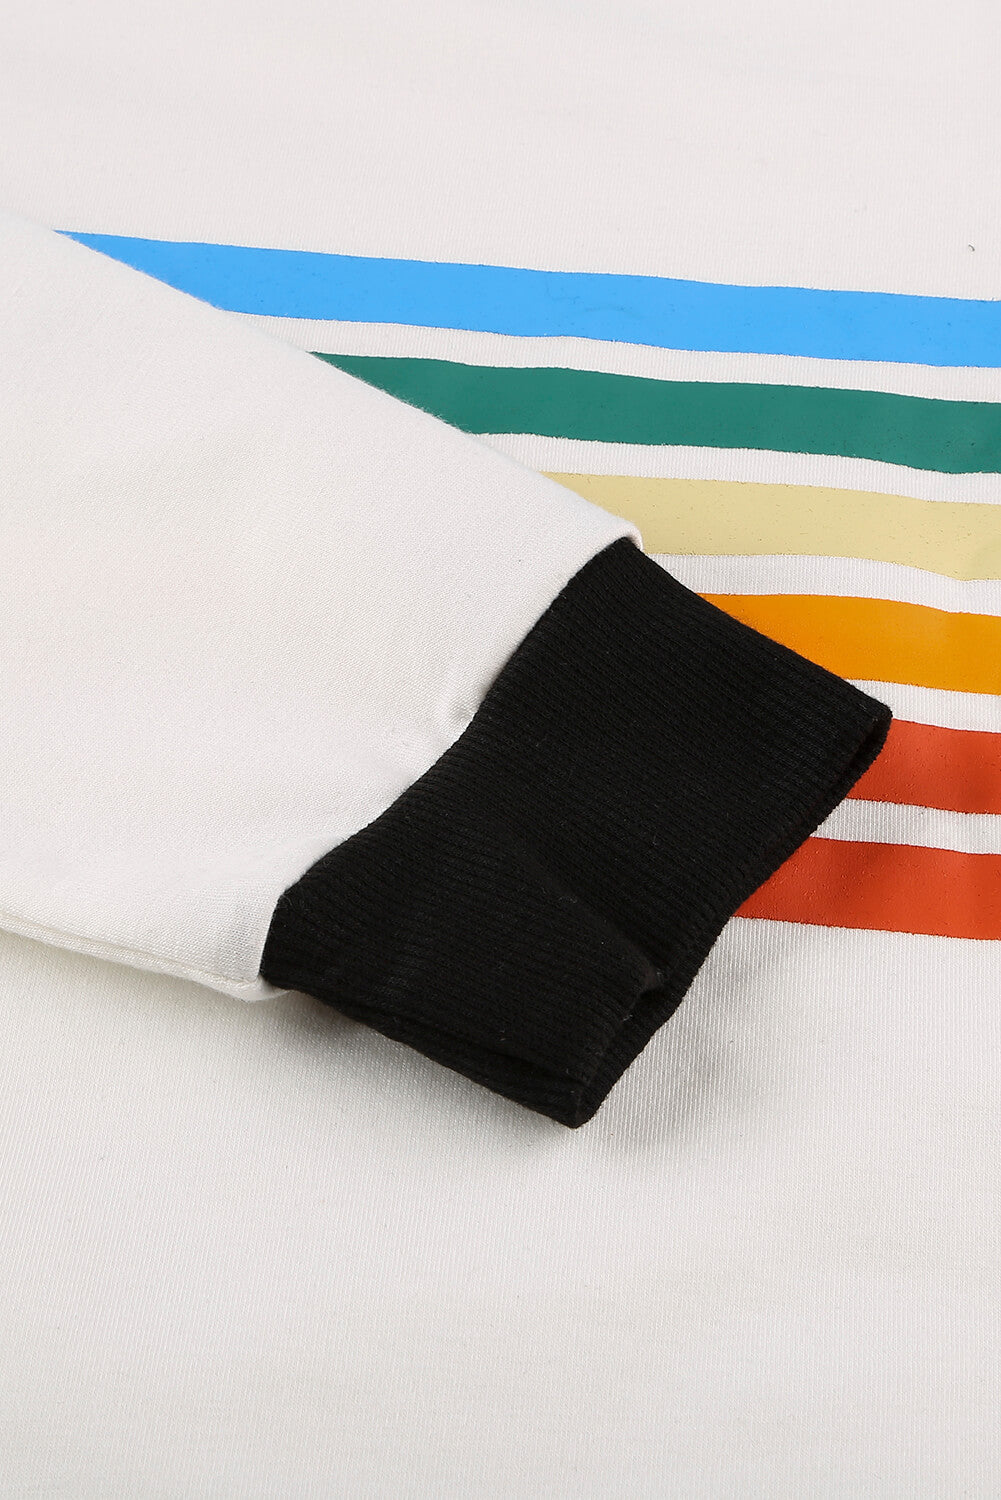 Casual Rainbow Print White Long Sleeve Top